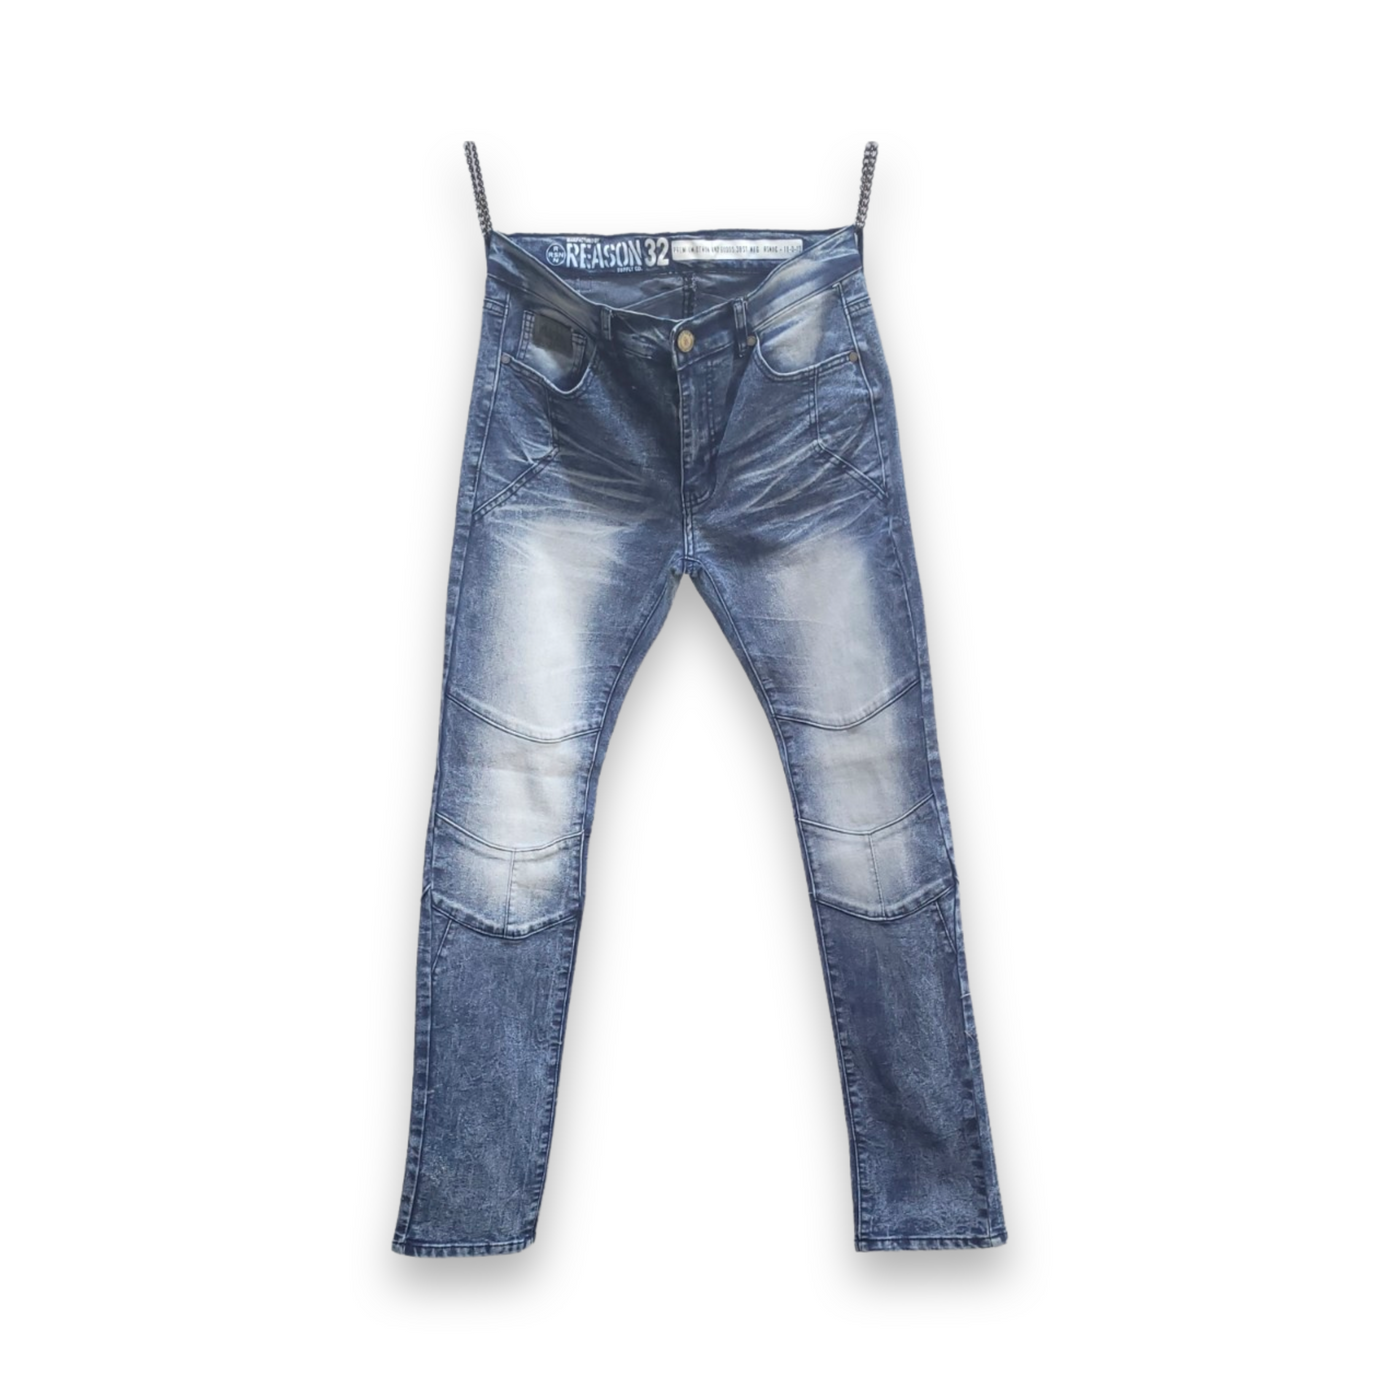 DMR003 Reason PREMIUM DENIM Fit jeans